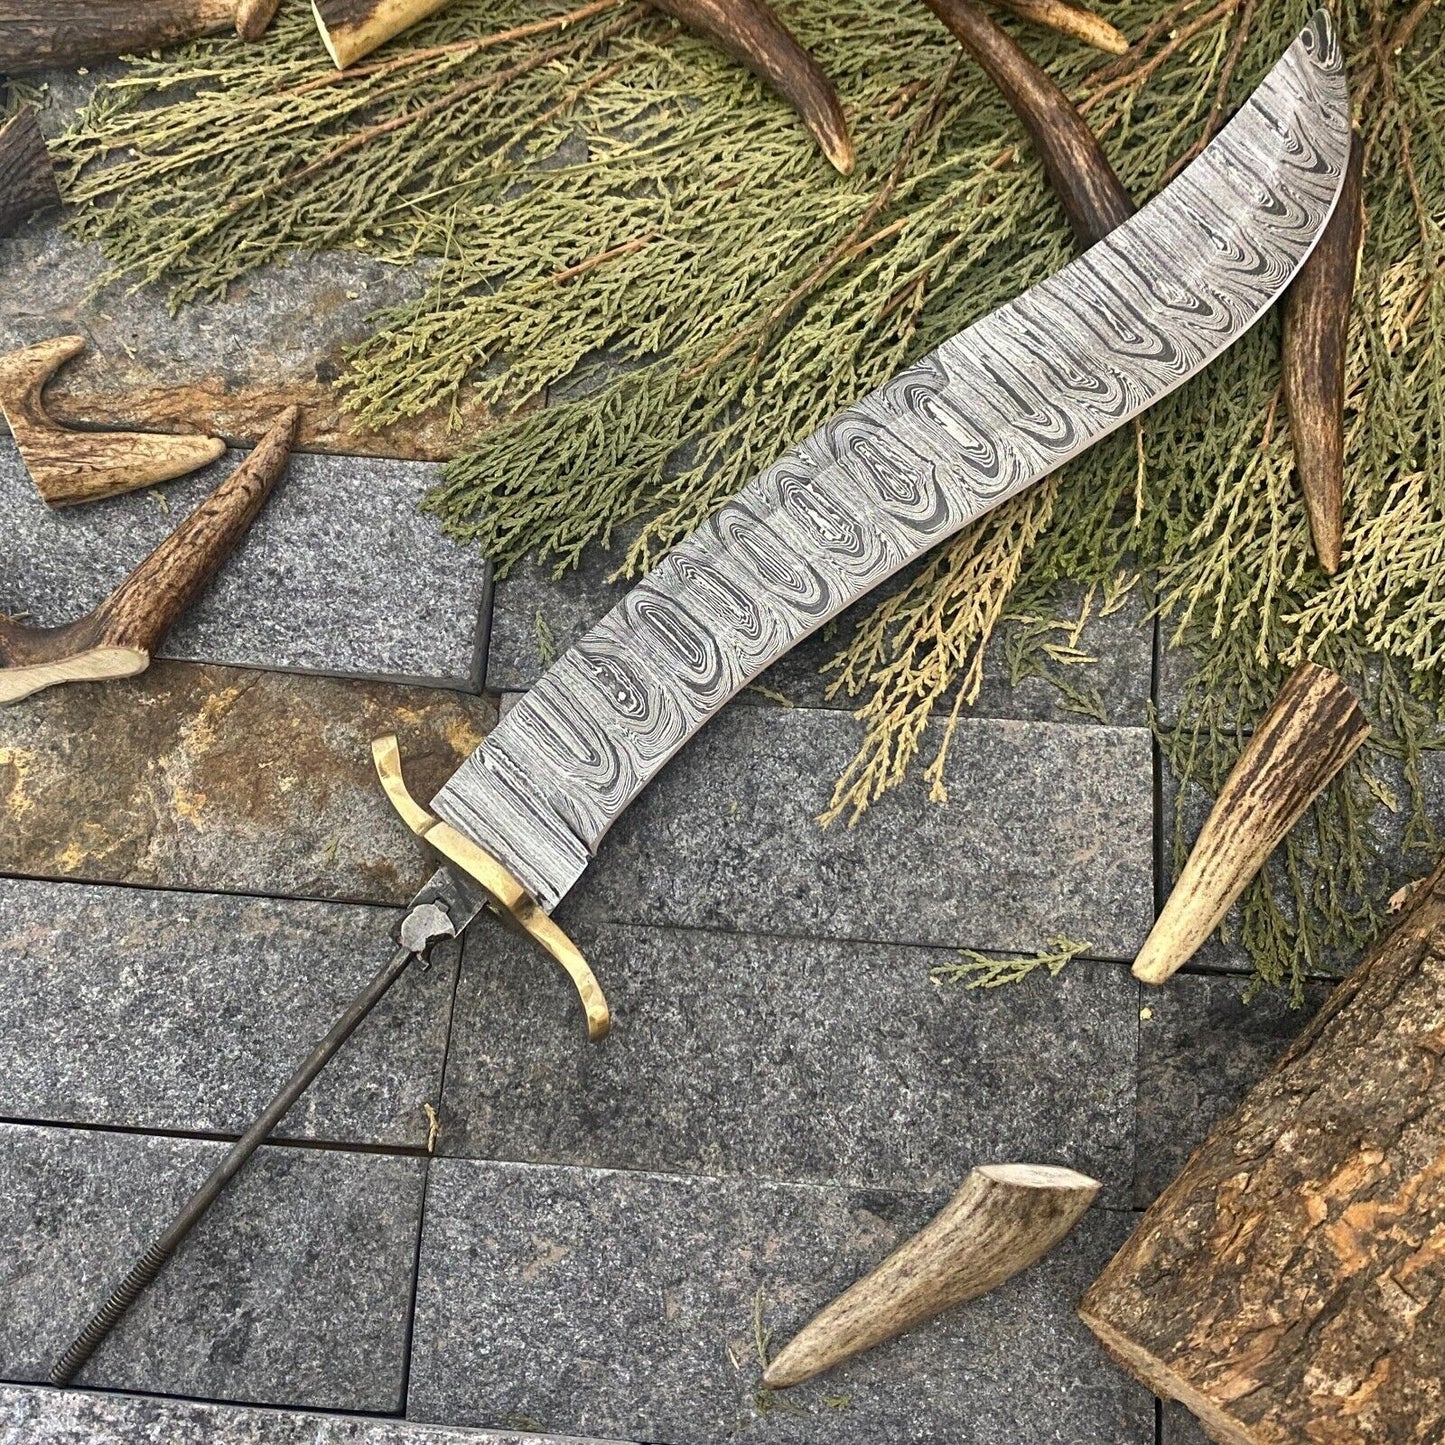 SHARDBLADE CUSTOM HAND FORGED DAMASCUS STEEL KUKRI Blank Blade Hunting Knife